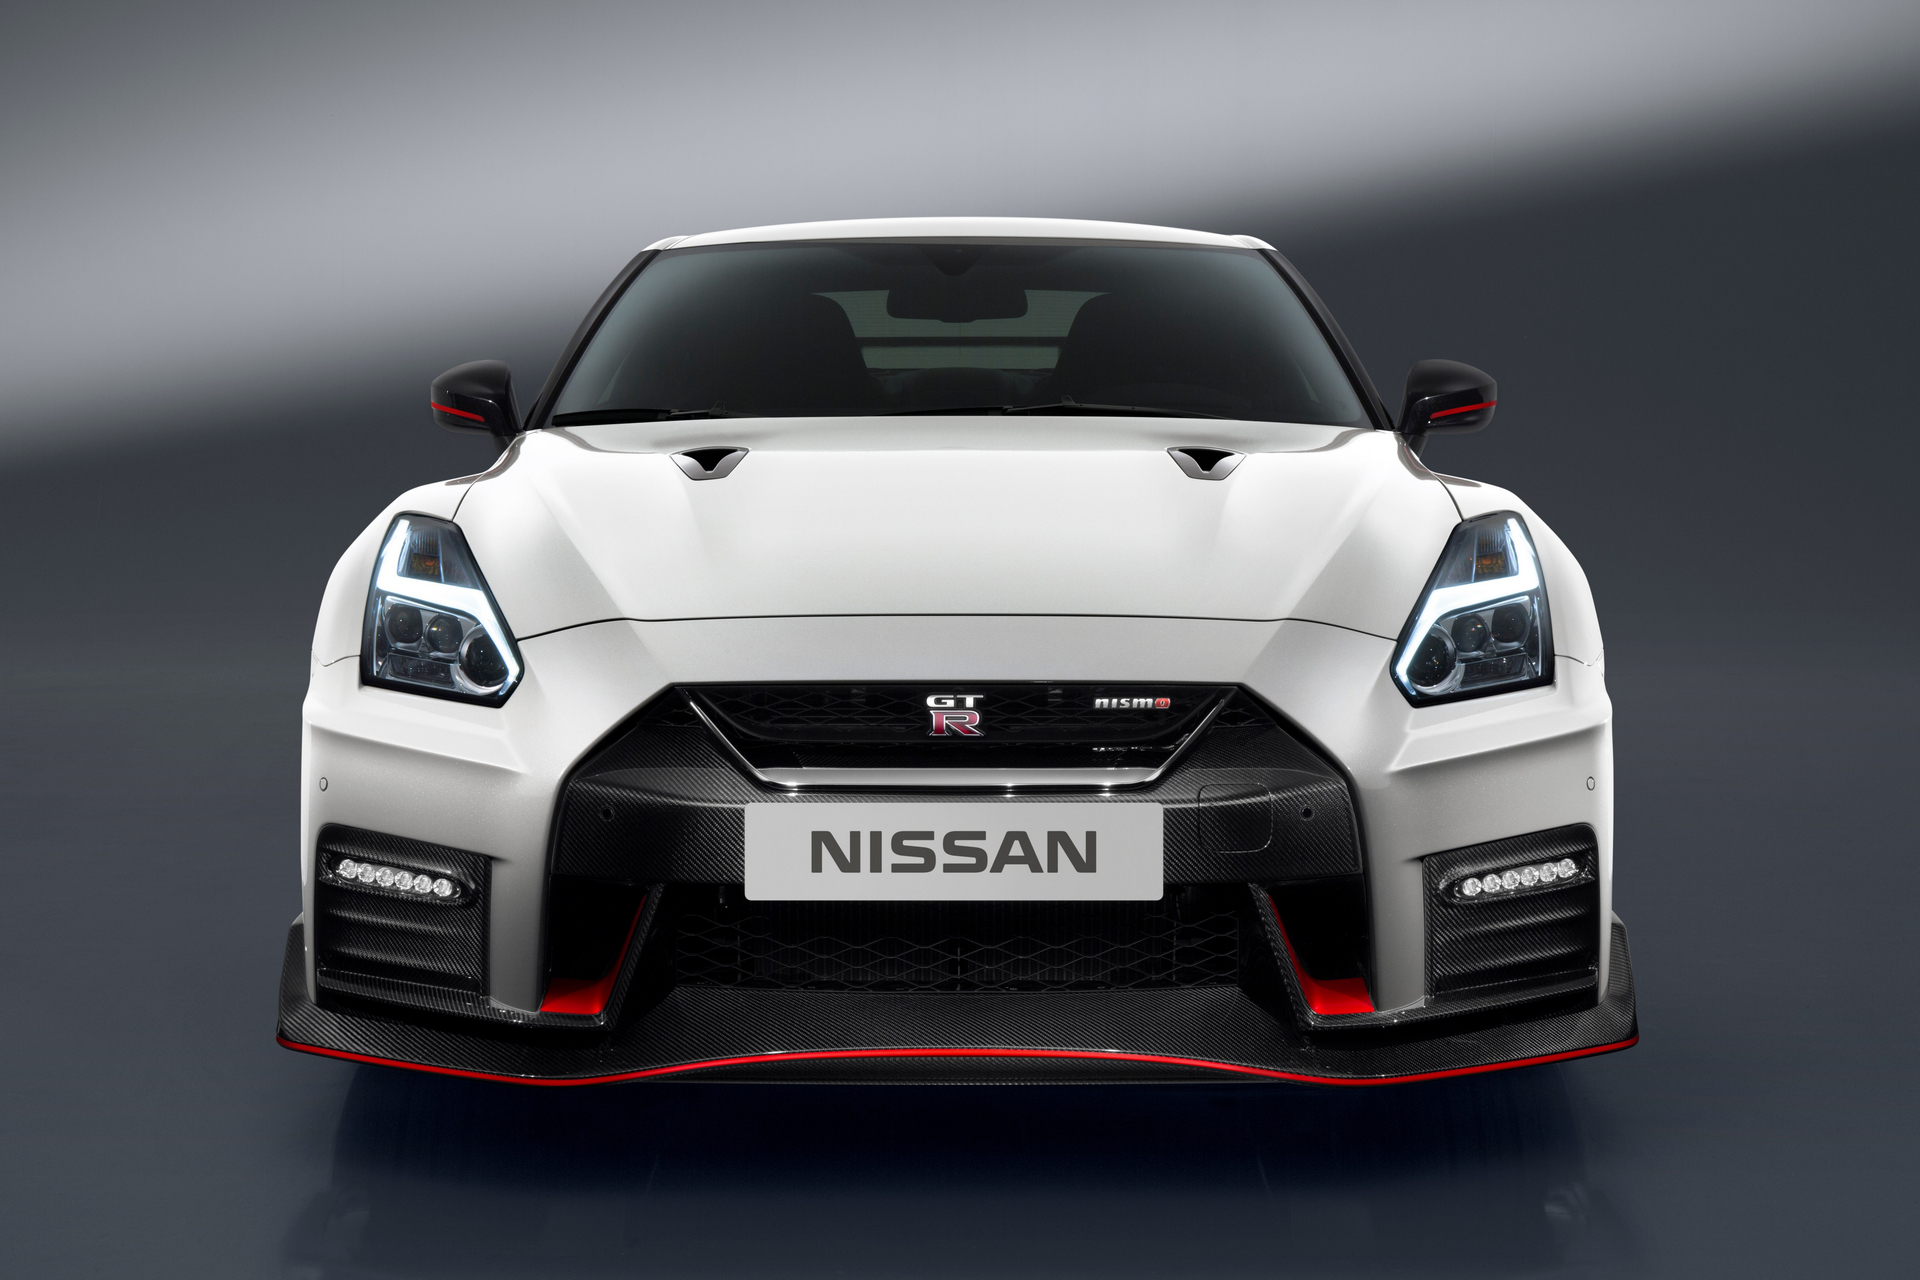 2017 Nissan GT-R NISMO © Nissan Motor Co., Ltd.